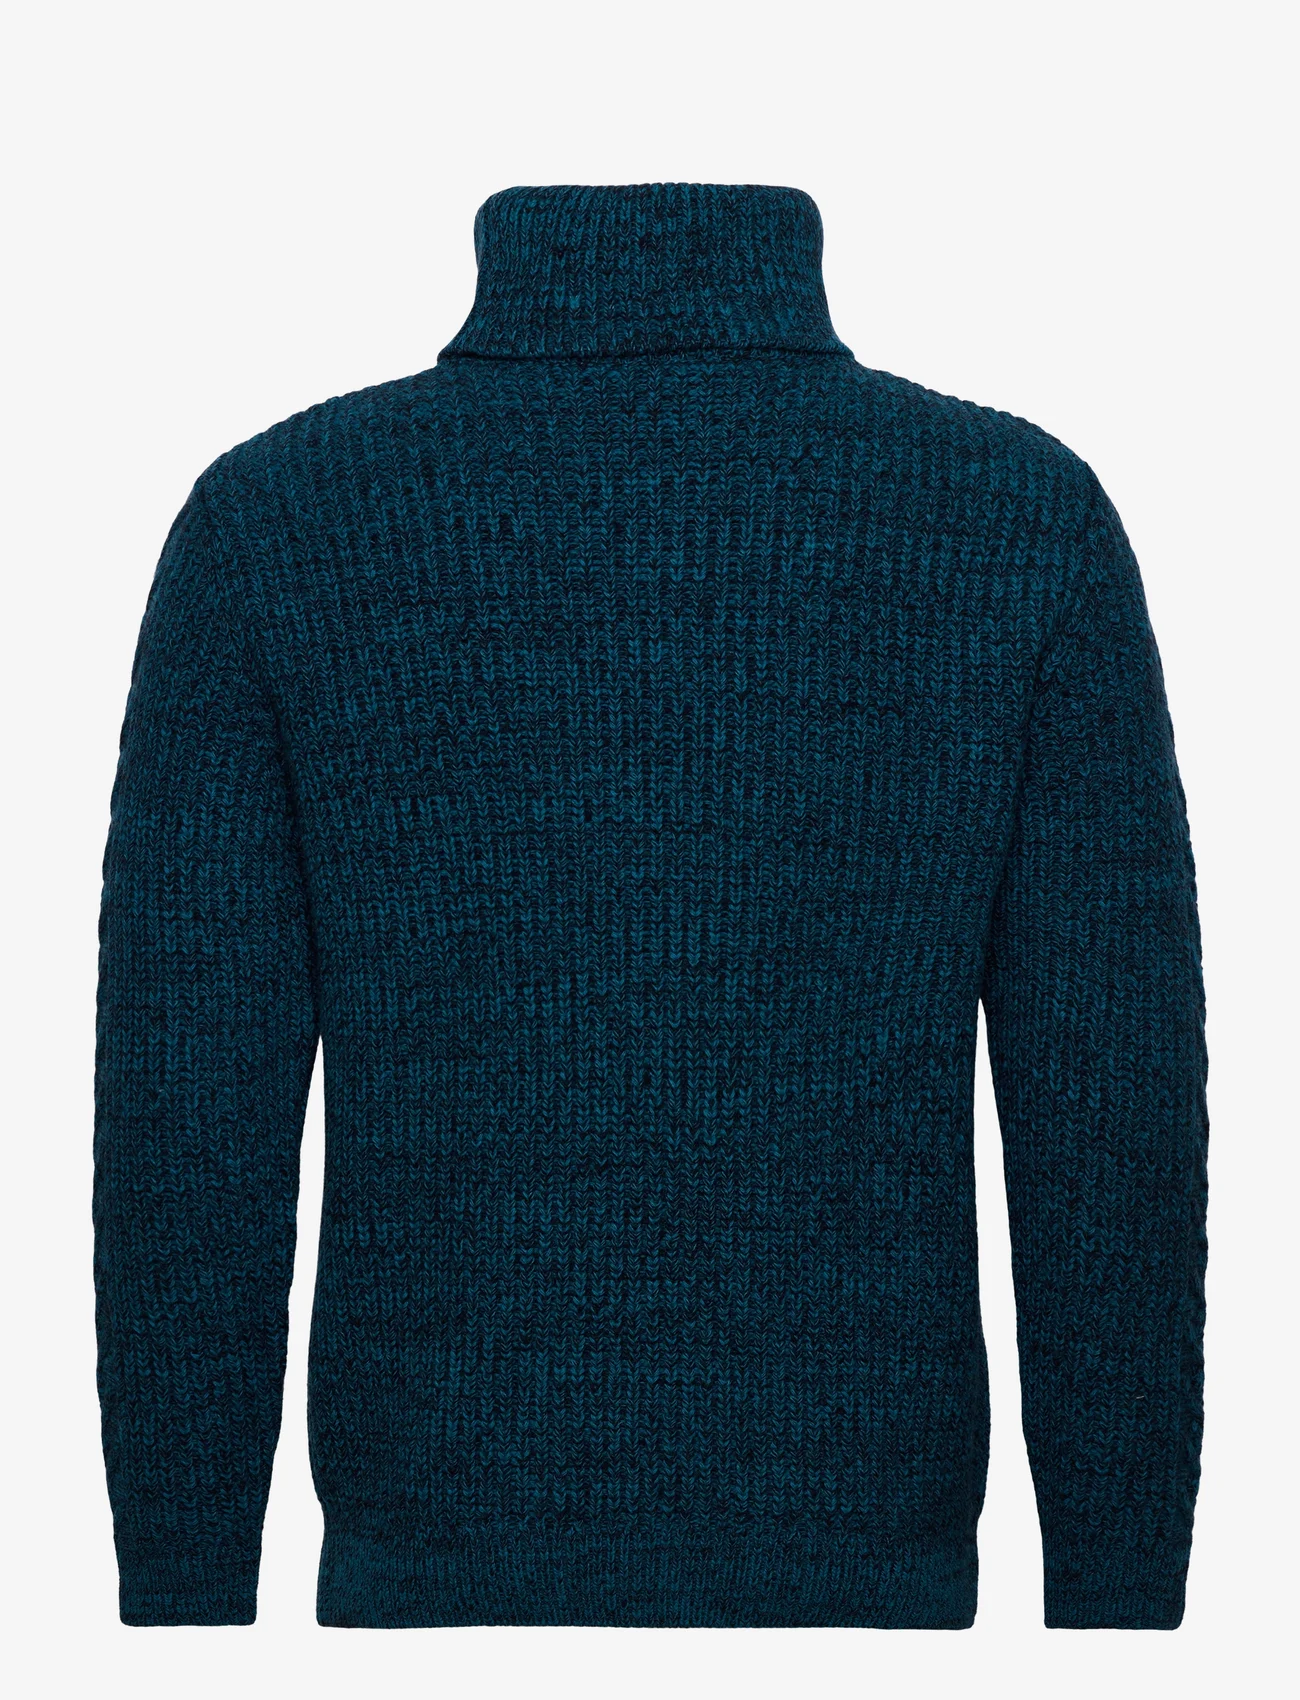 Armor Lux - Turtle neck Sweater Héritage - golfy - moulinÉ bleu glacial - 1